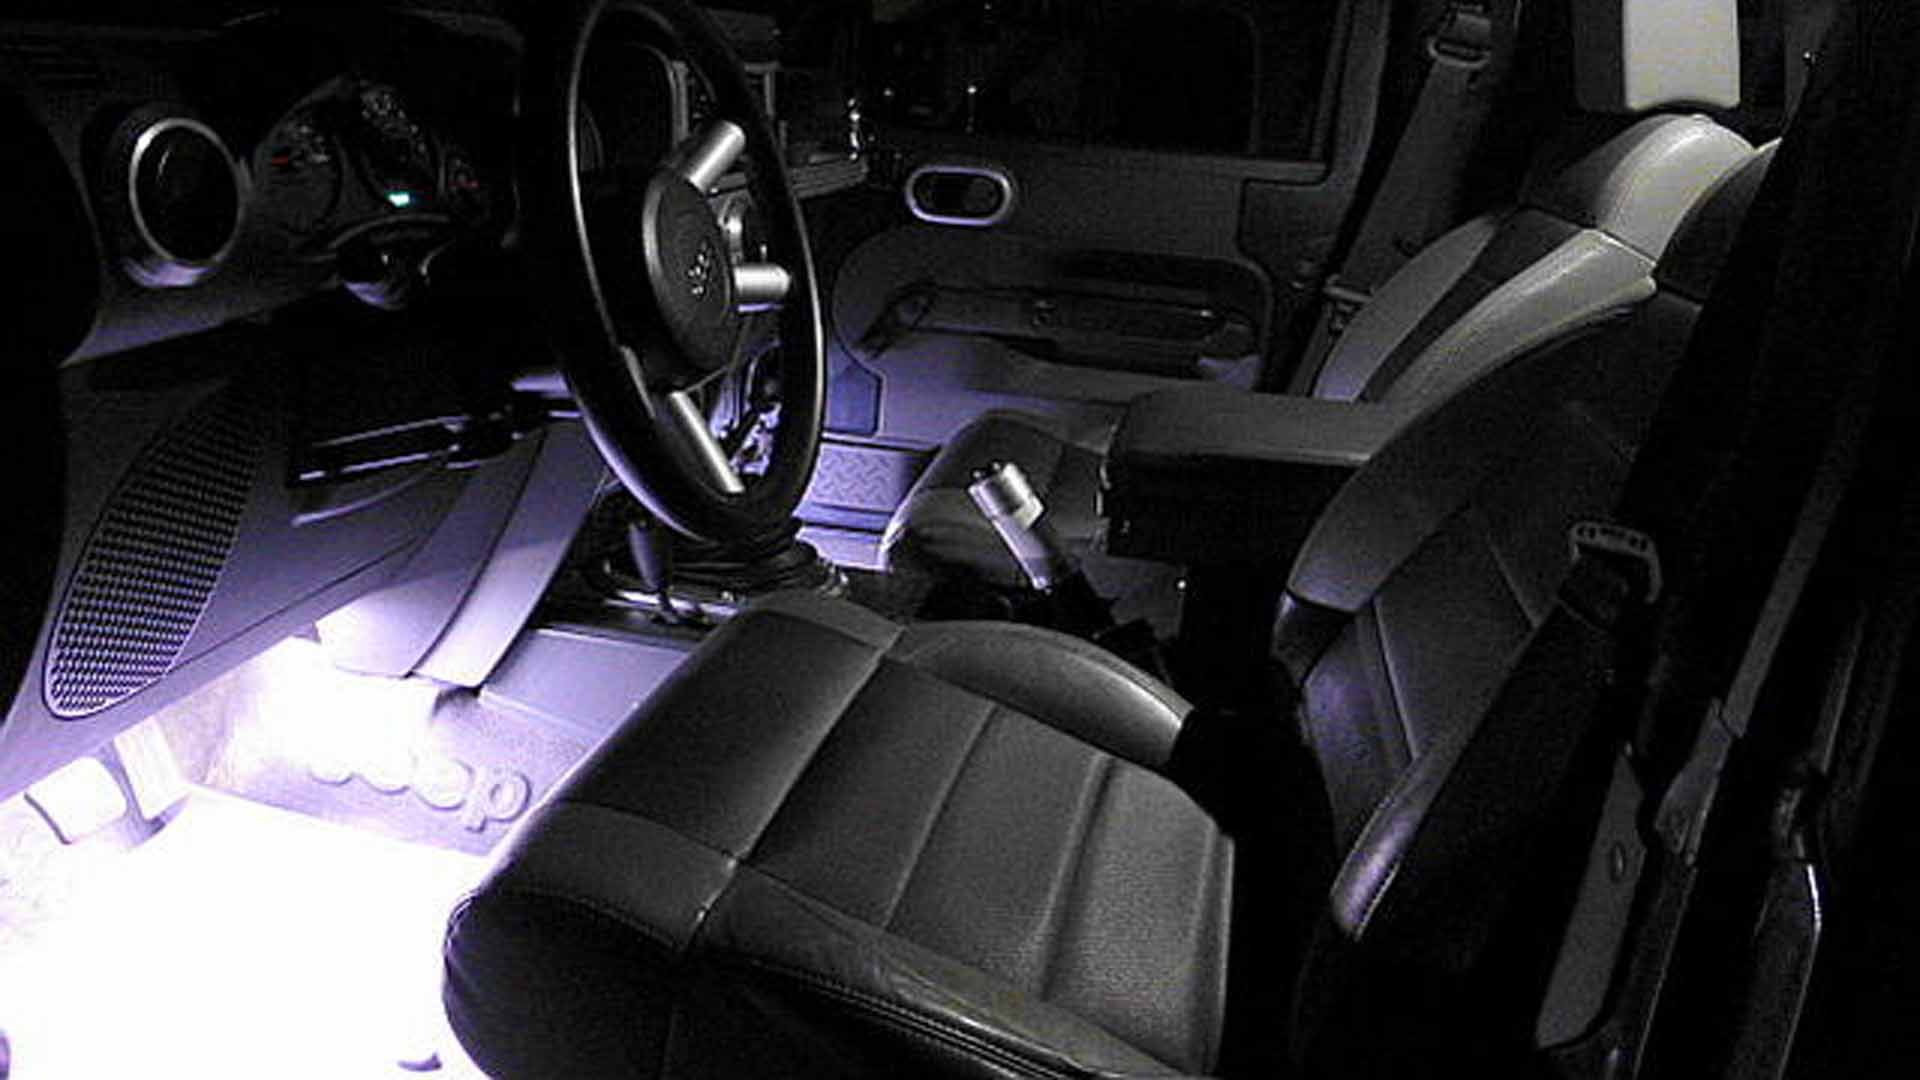 Jeep Wrangler JK: How to Install LED Foot Well Lighting | Jk-forum